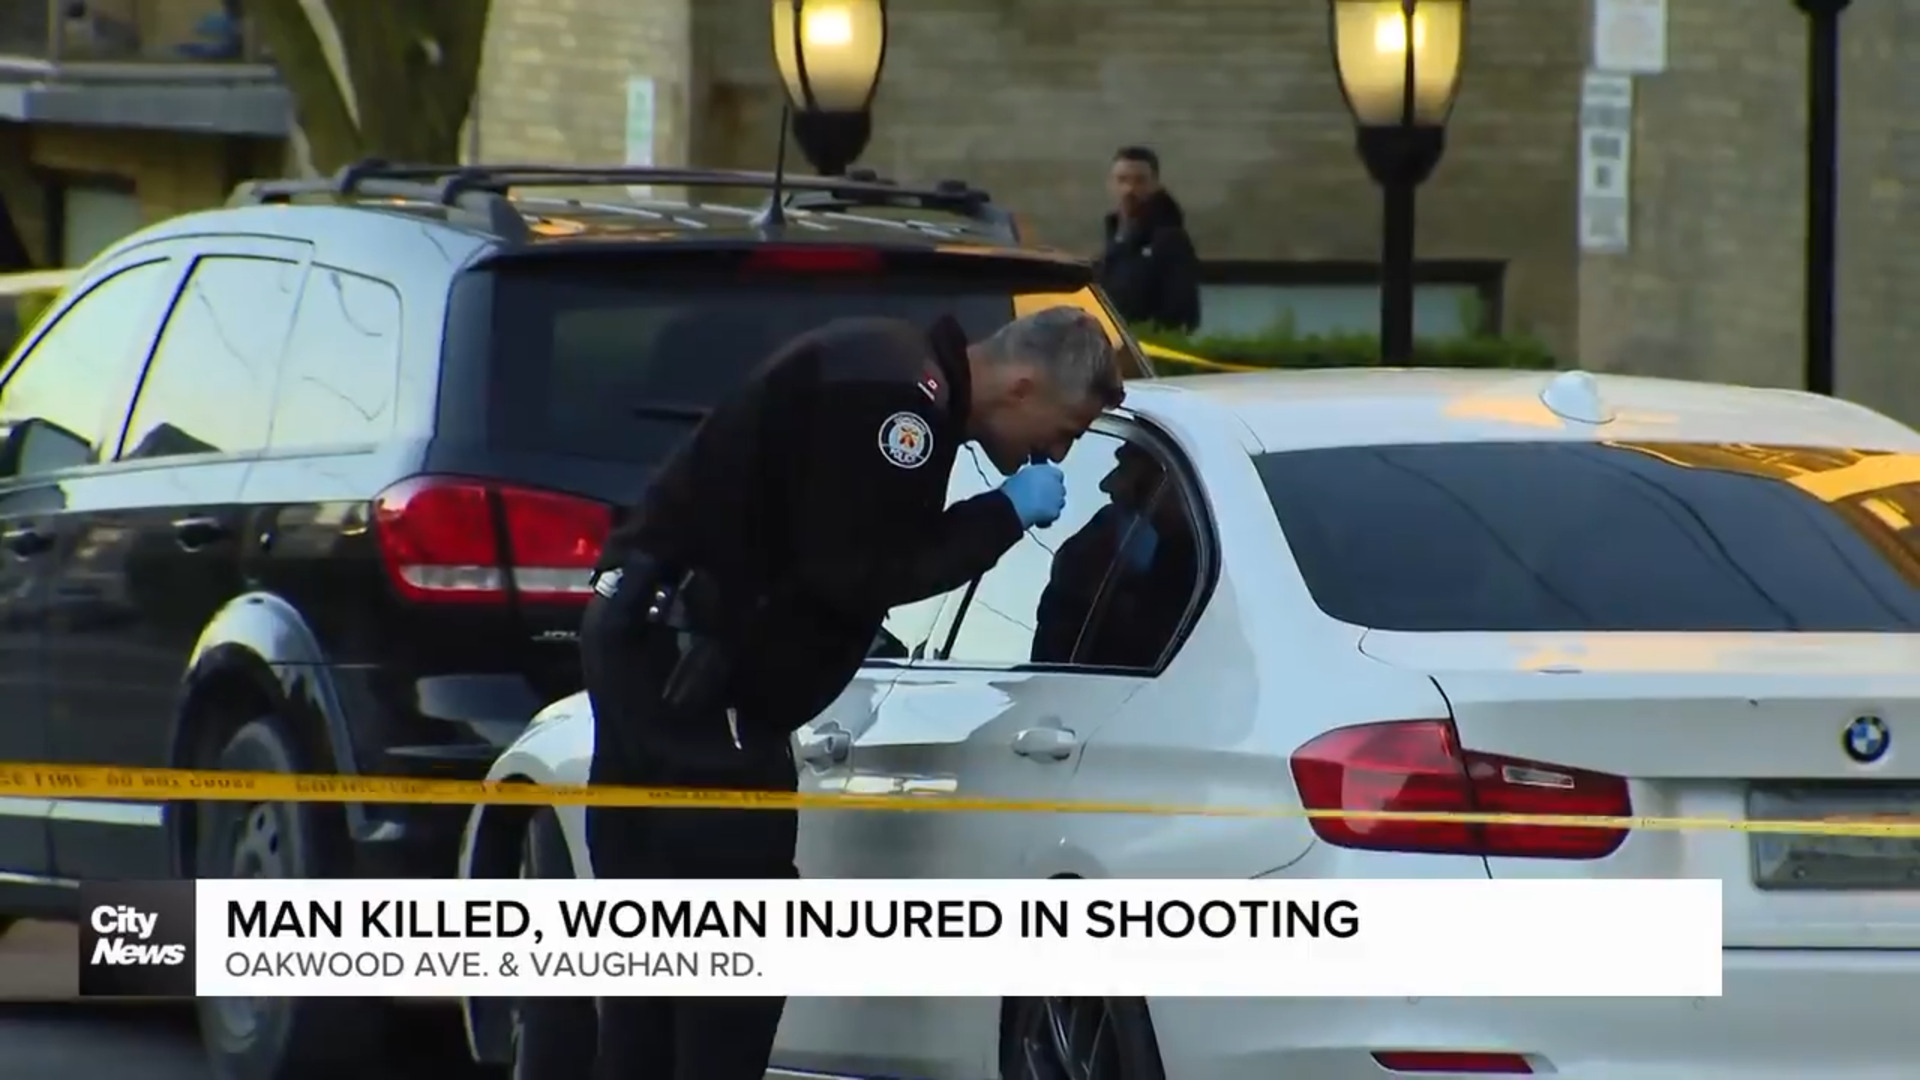 Man killed in overnight shooting, woman injured